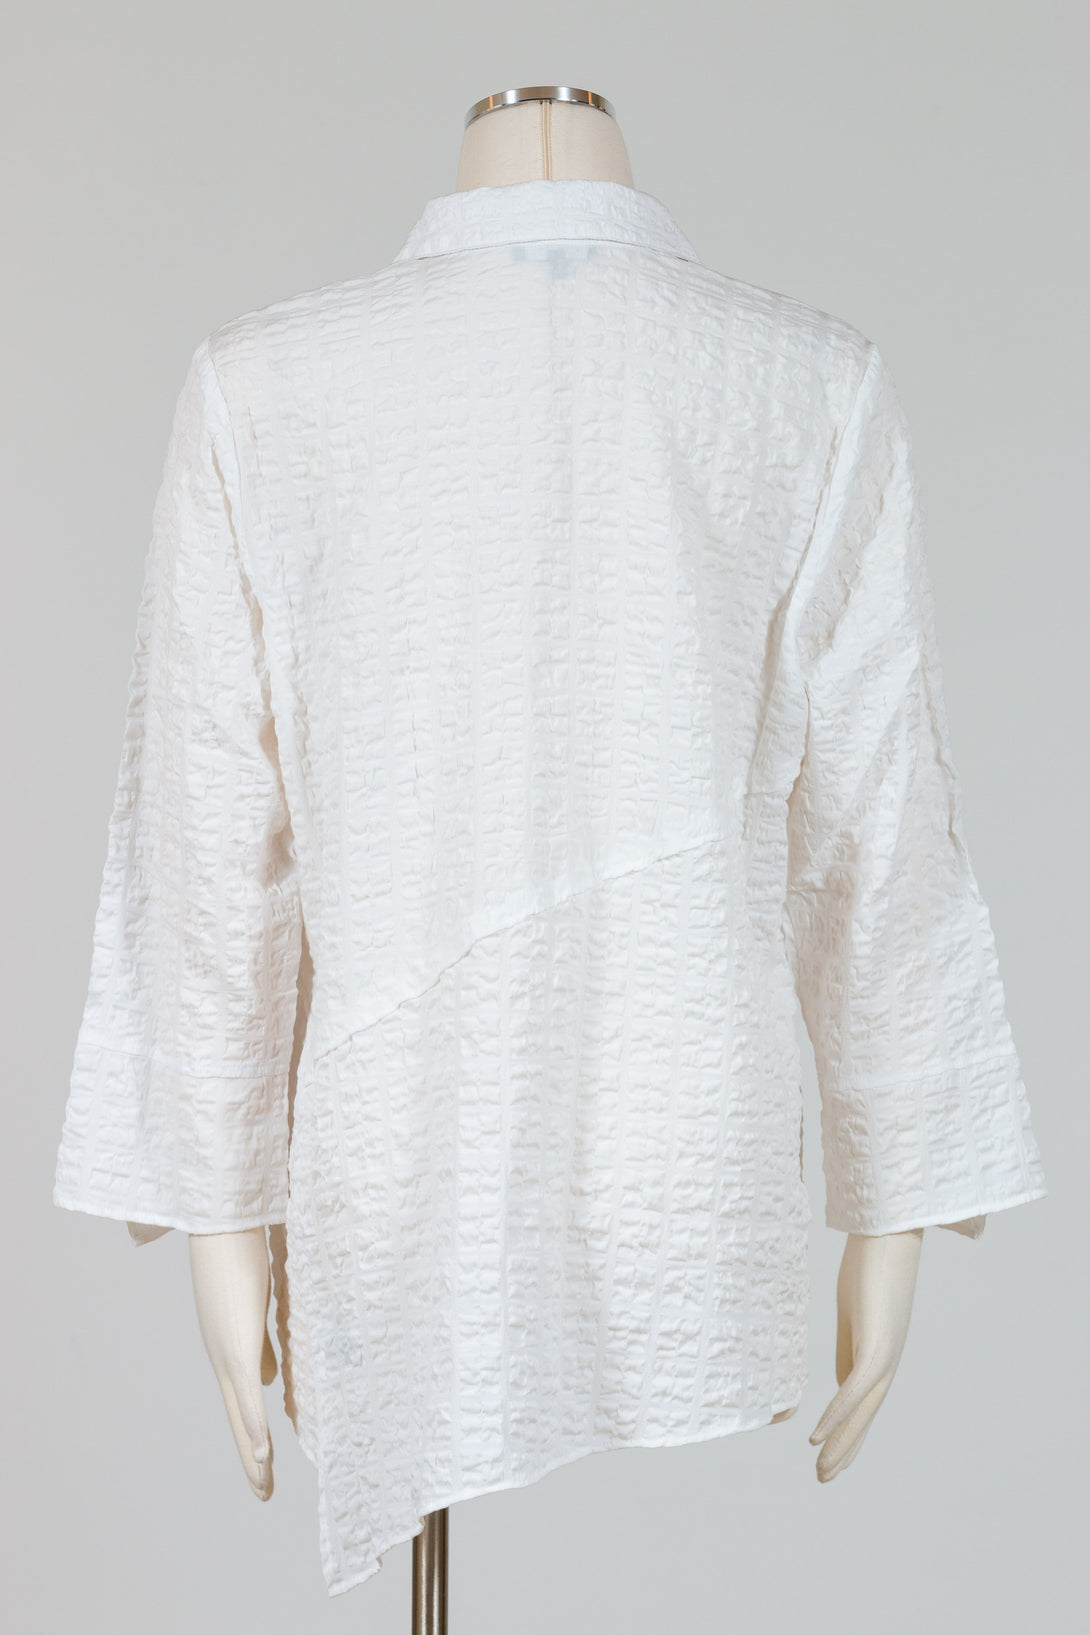 Habitat Pucker Asymmetrical Shirt (Woven) {Black/White}